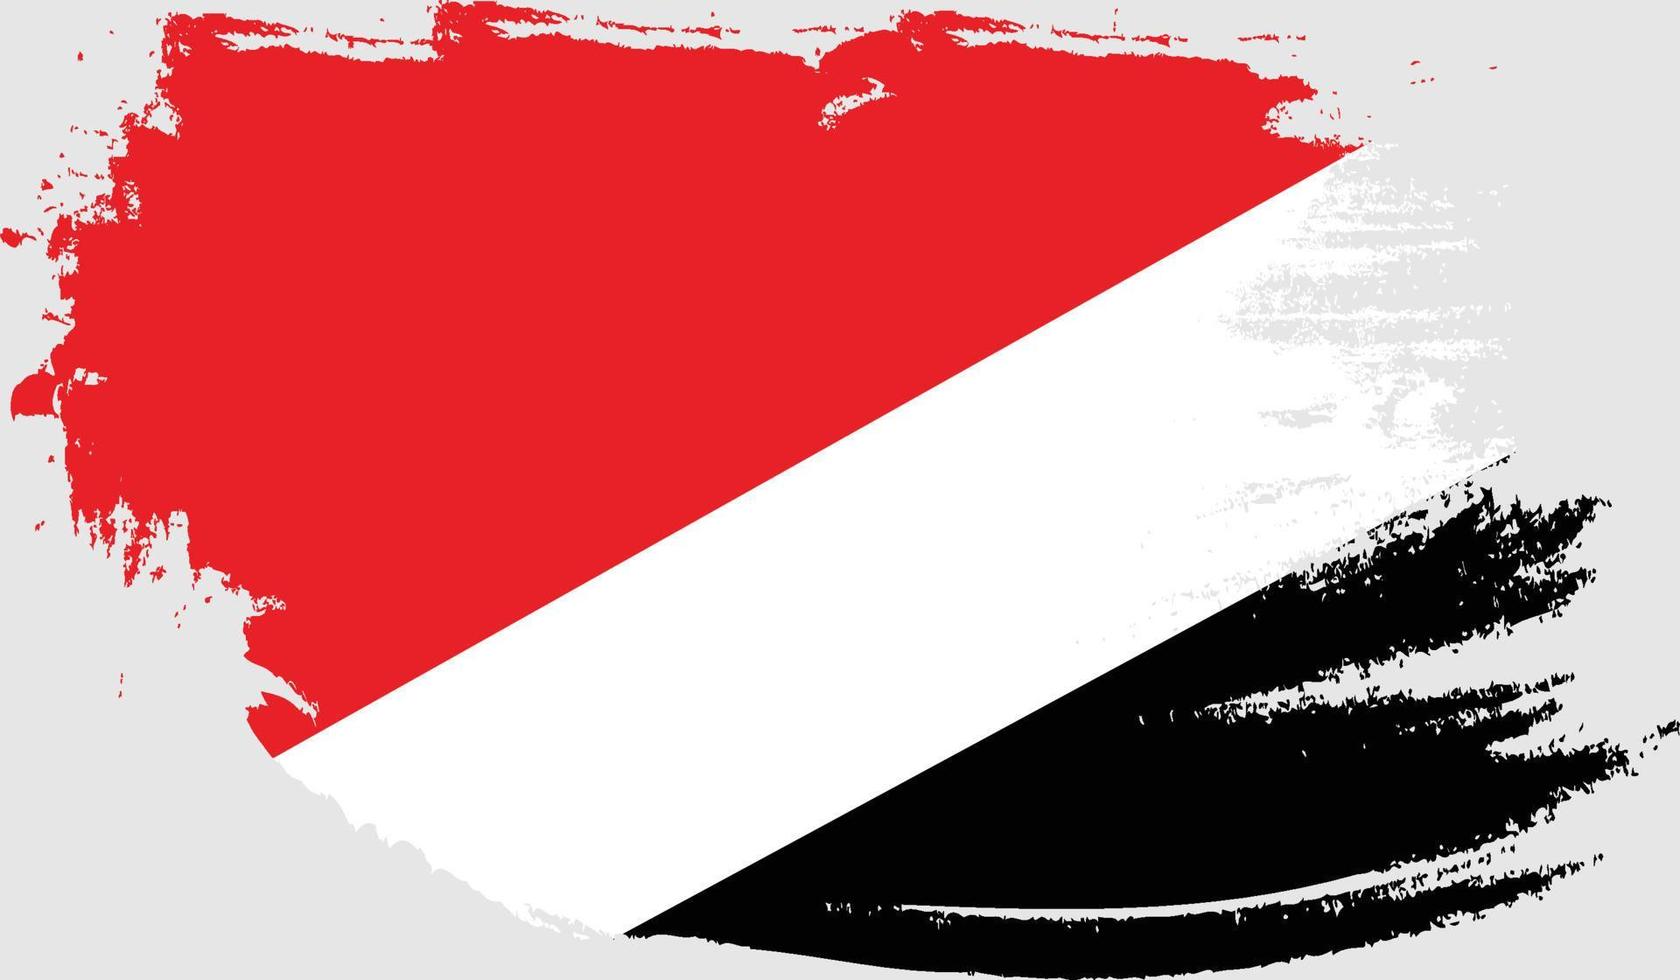 sealand Principality of Sealand flag with grunge texture vector